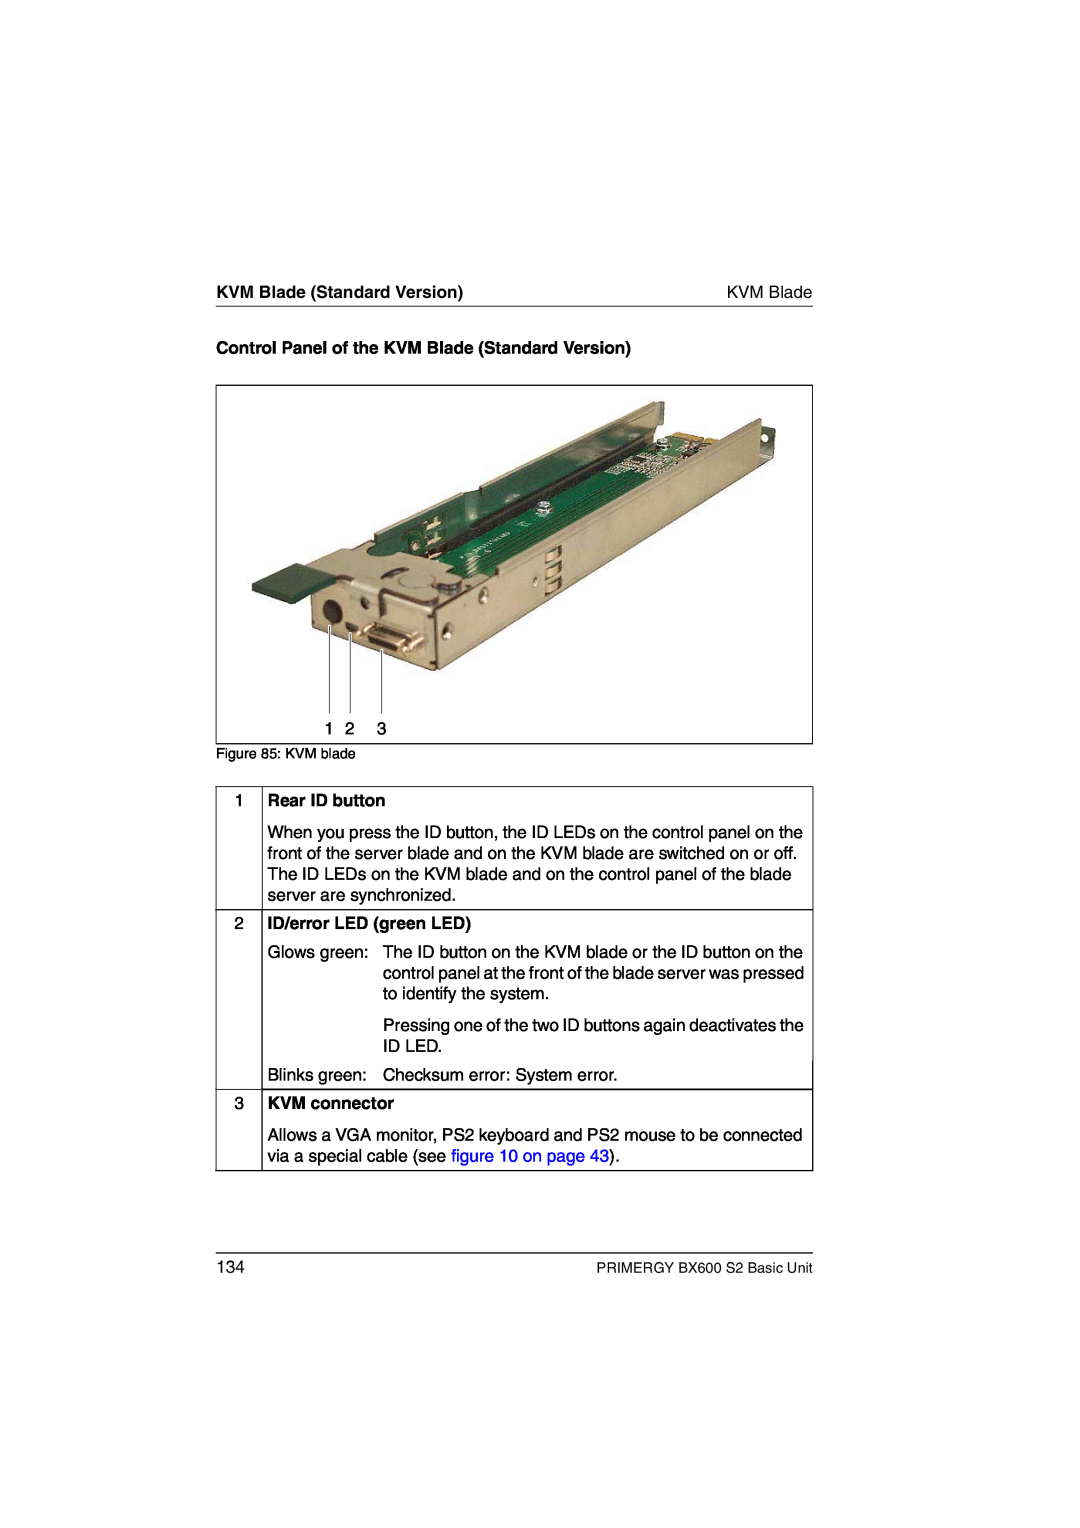 Fujitsu BX600 S2 manual Control Panel of the KVM Blade Standard Version, Rear ID button, ID/error LED green LED 